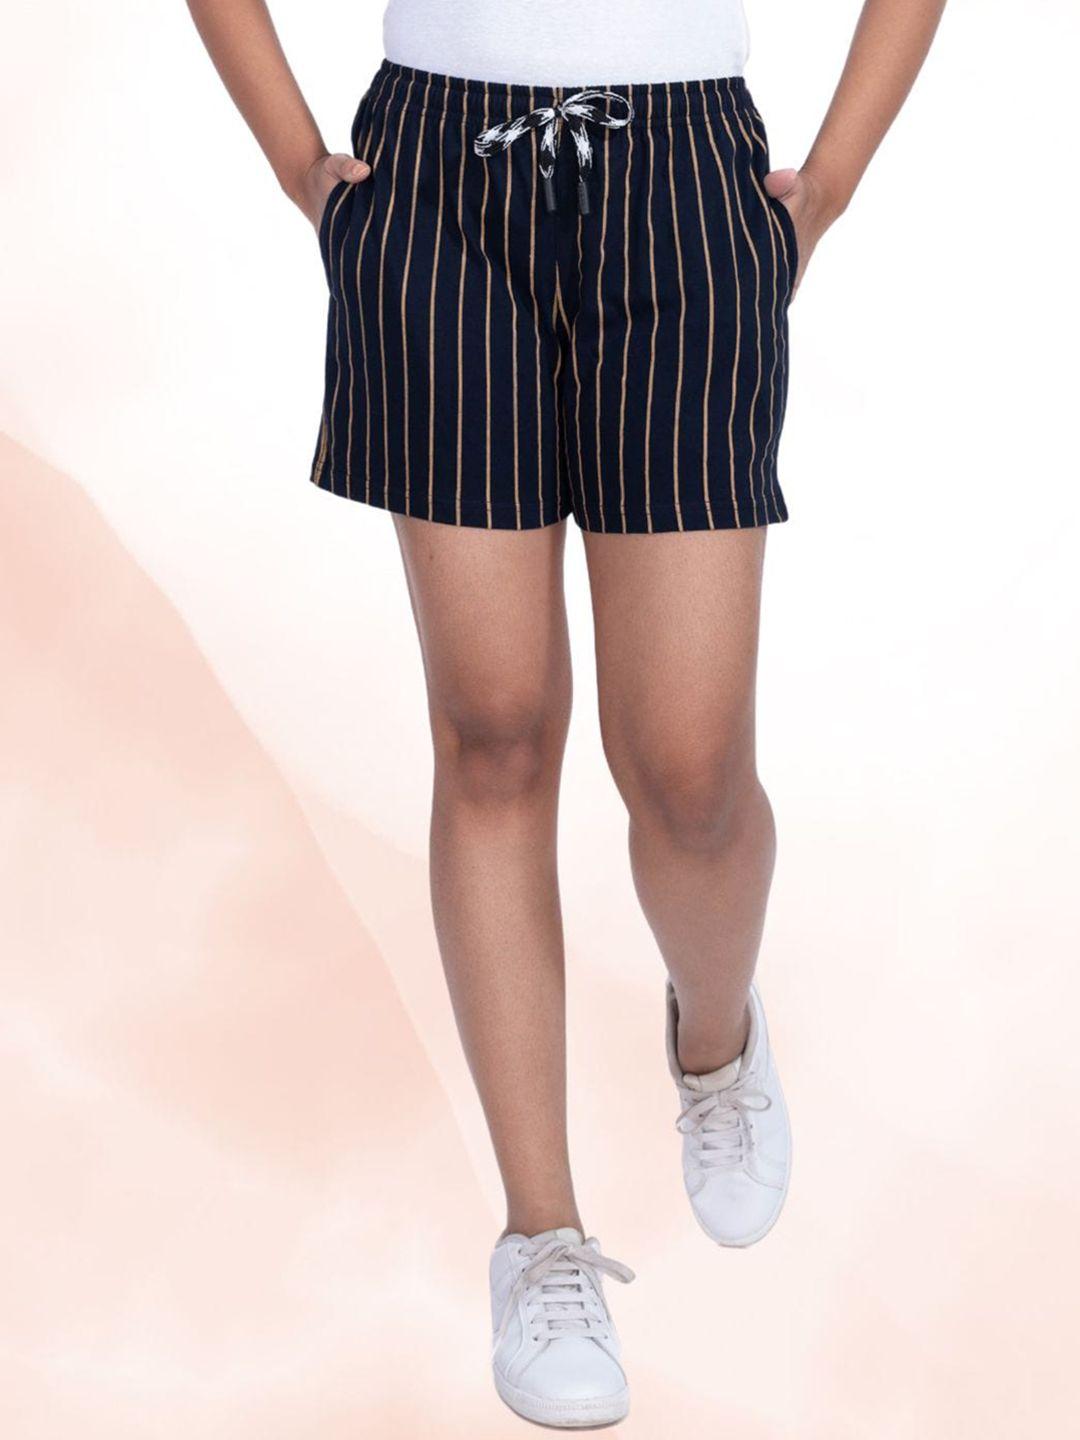 styleaone women striped cotton shorts